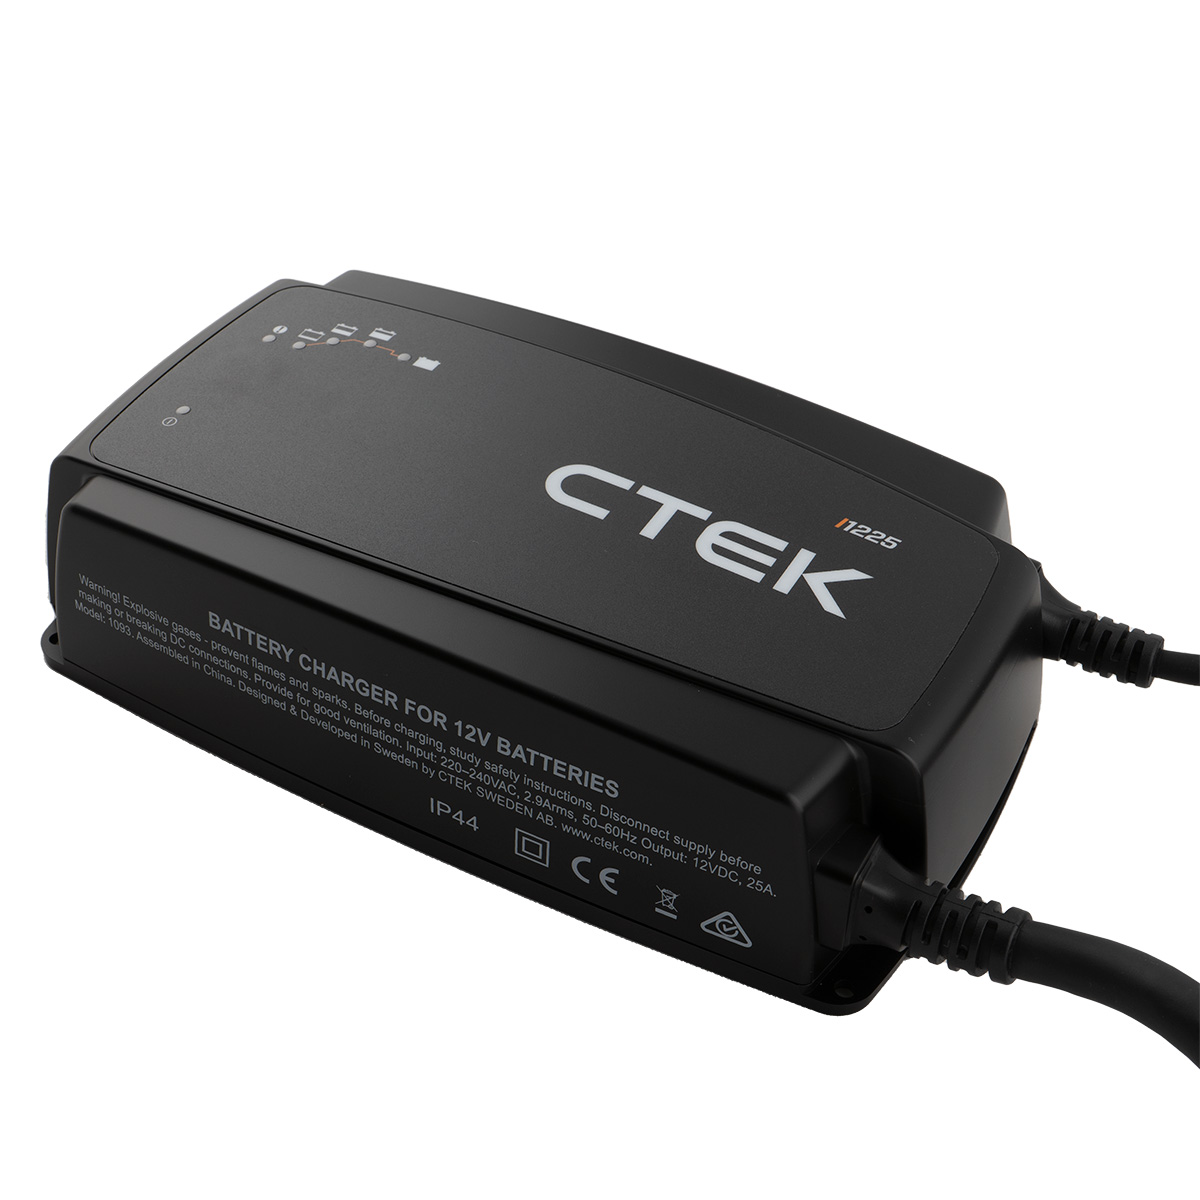 CTEK I1225 EU Batterie Ladegerät 12V 25A